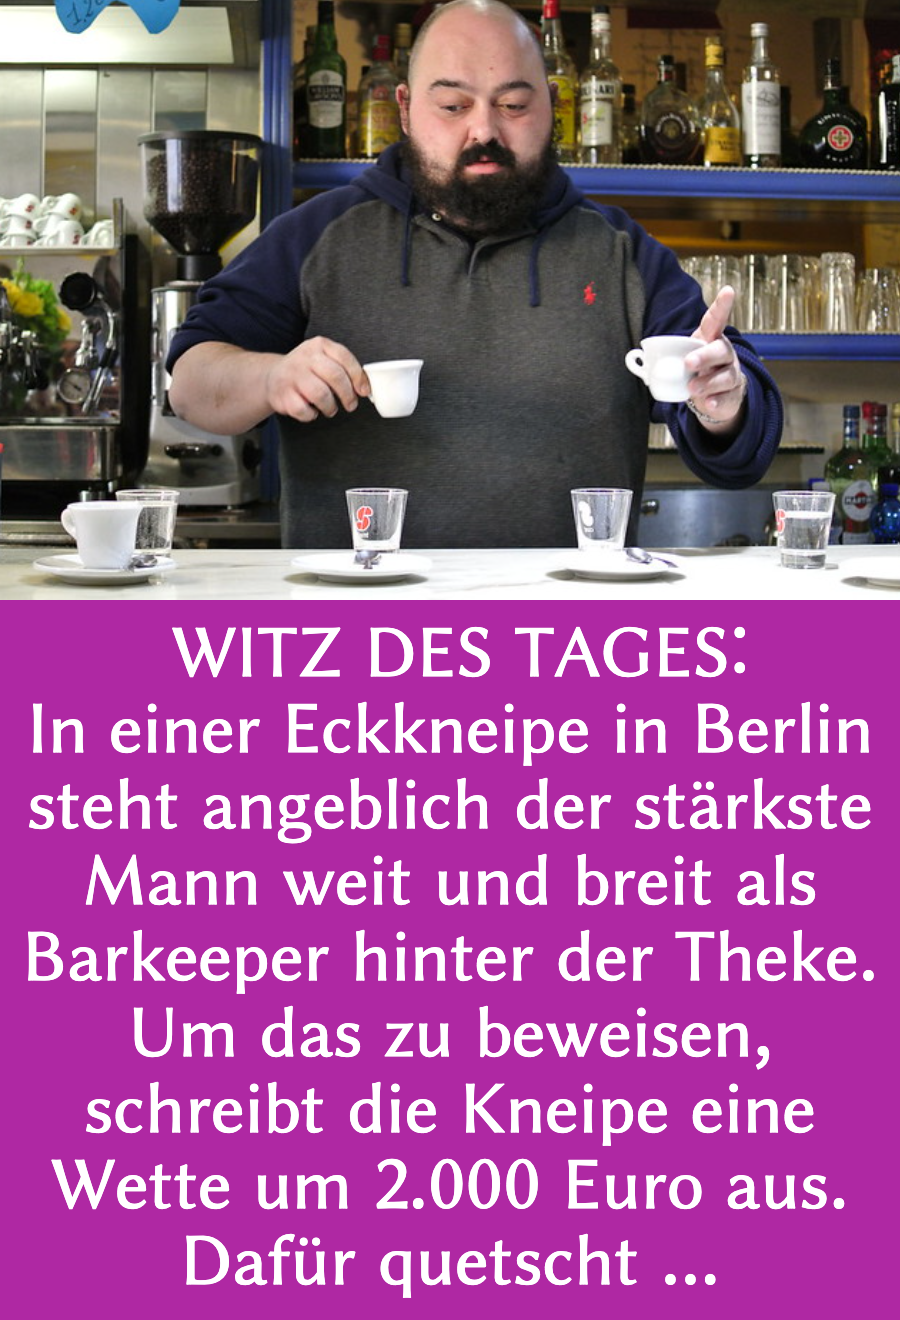 Kneipenwitz: Barkeeper verliert Wette gegen Hänfling